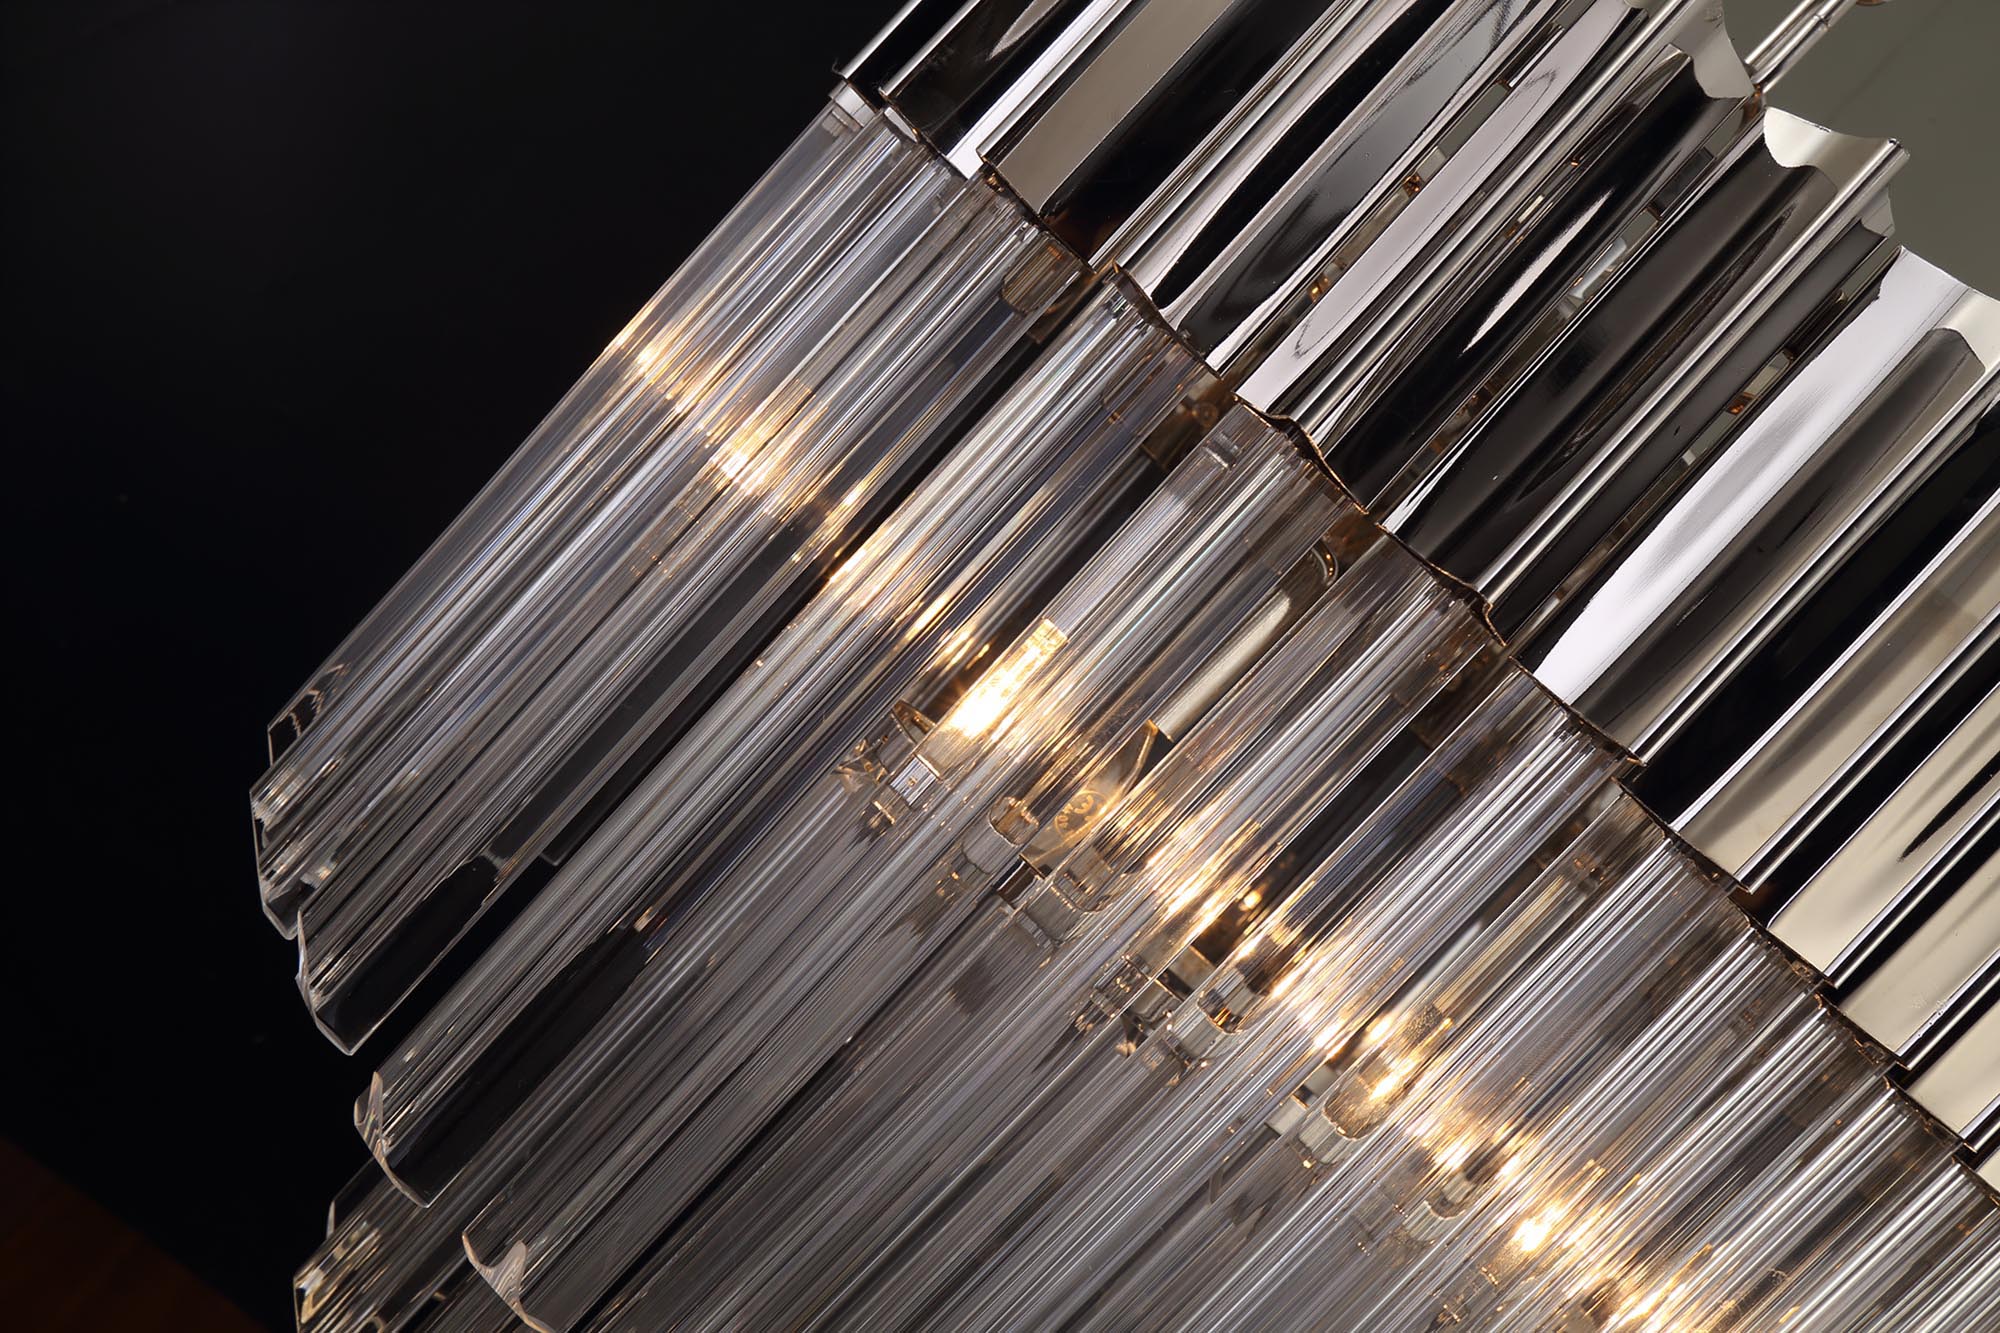 Knightsbridge Pendant Rectangle 5 Light E14, Polished Nickel/Clear Glass - LO182453. Item Weight: 21.2kg